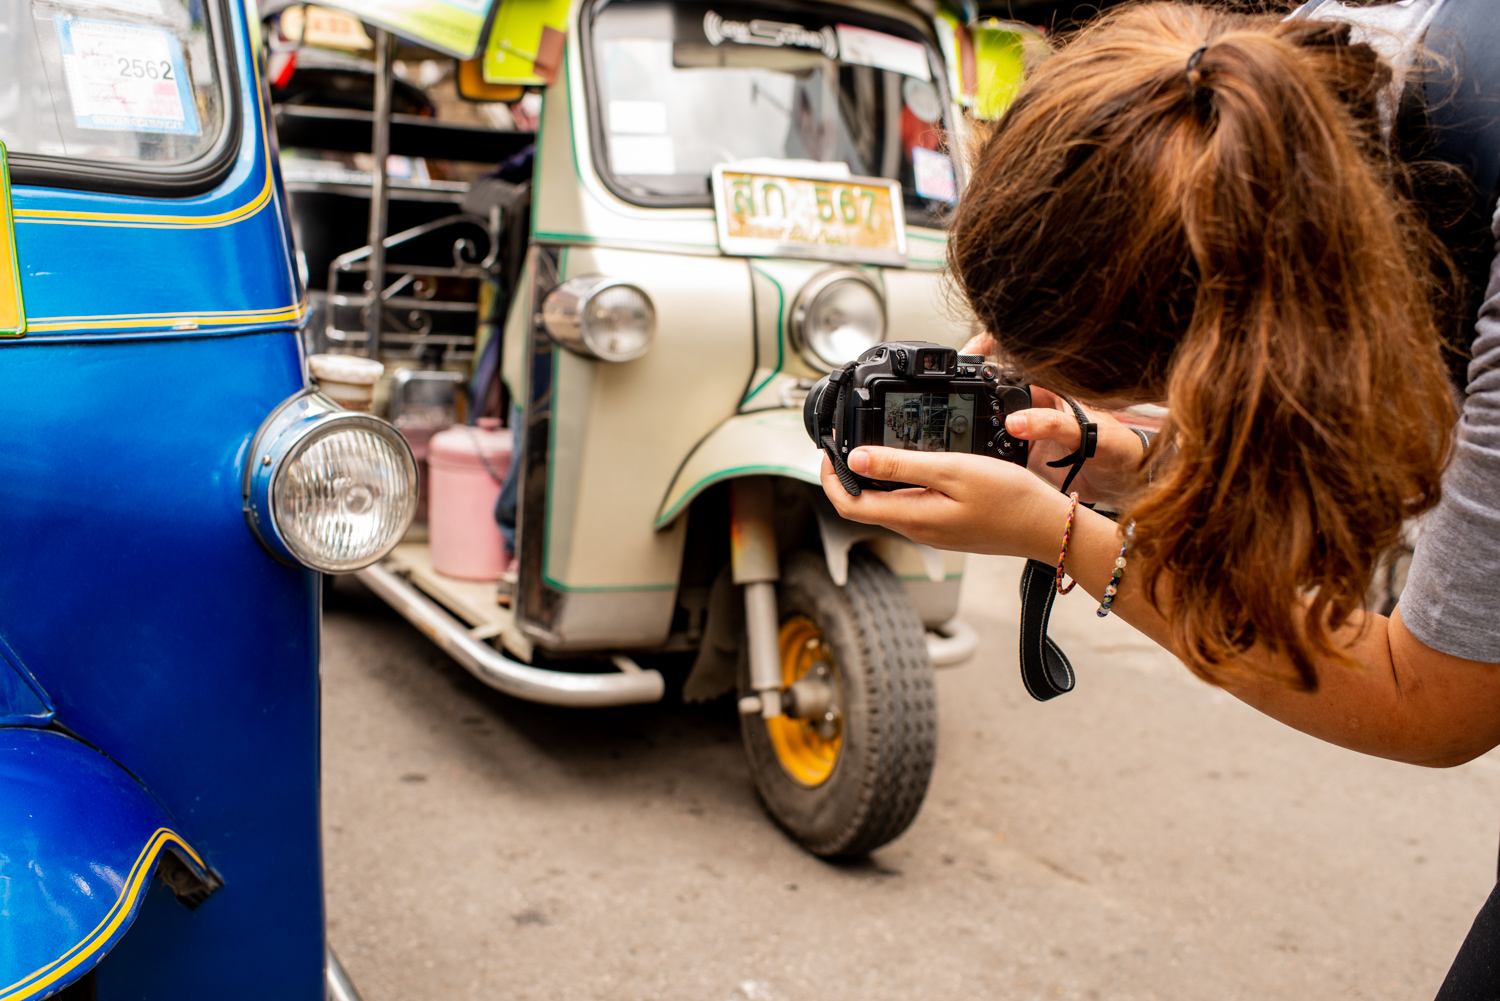 Young woman taking a photograph of tuk tuks